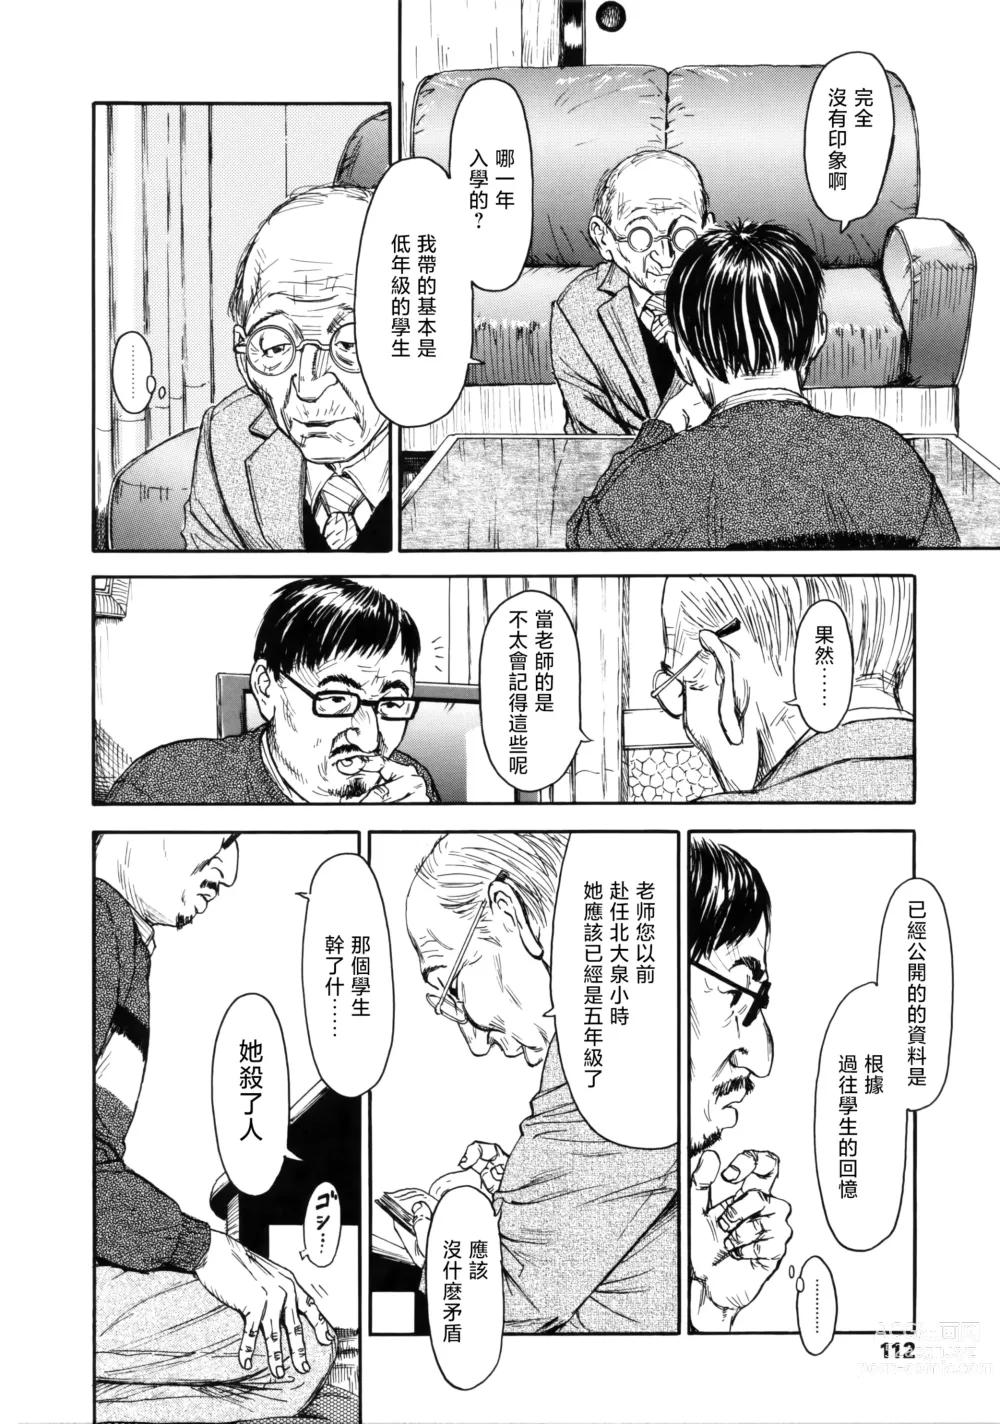 Page 12 of manga Mezame